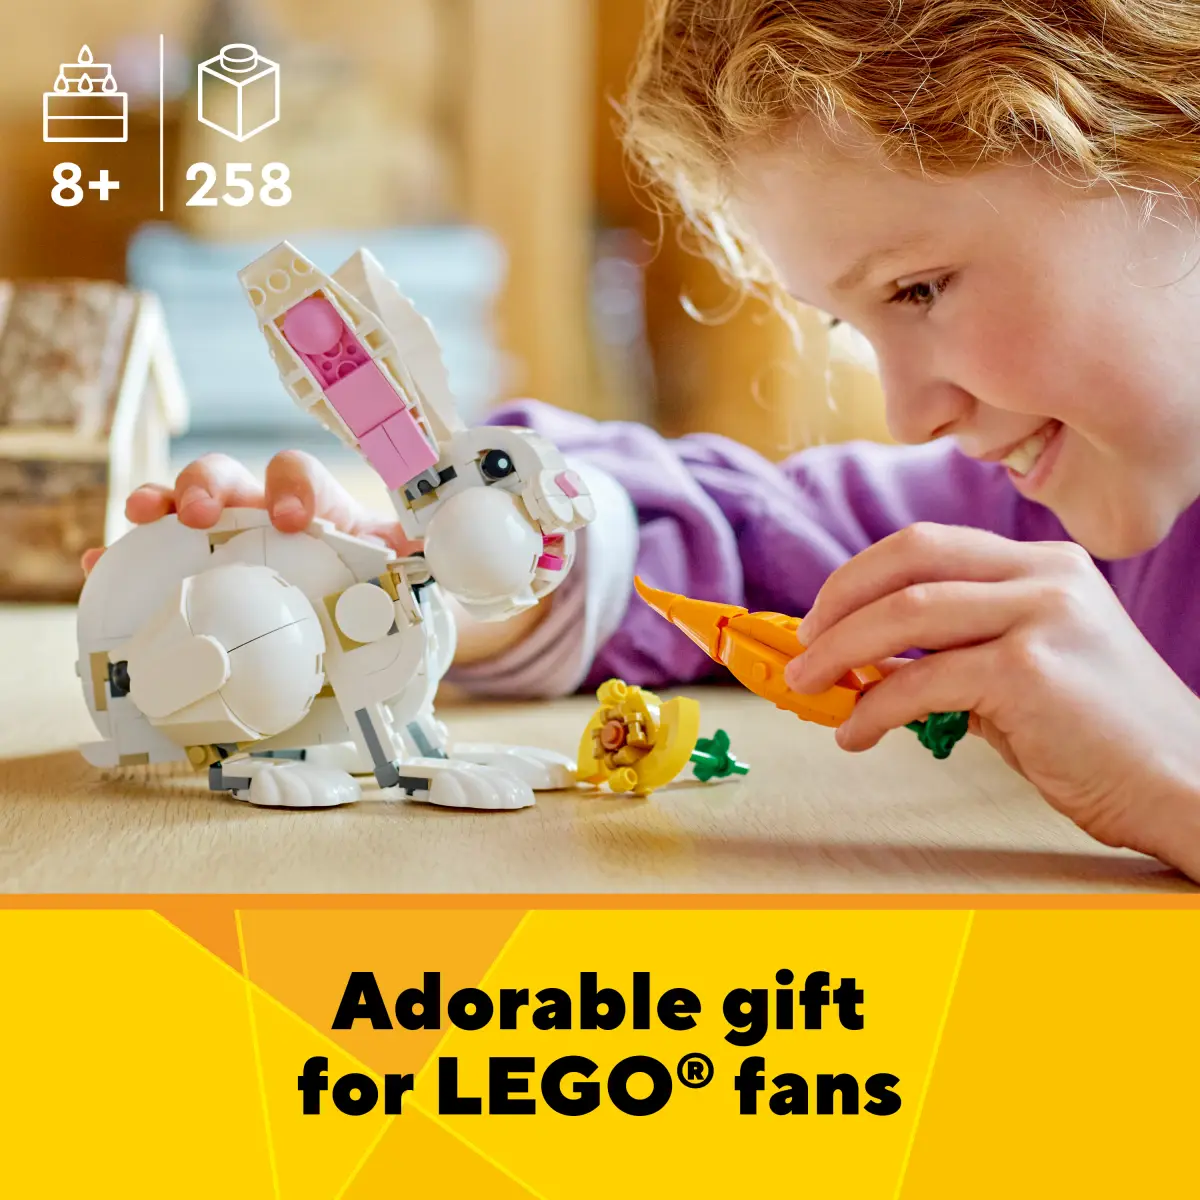 LEGO Creator 3in1 White Rabbit Building Toy Set, 258 Pieces, Multicolour, 8Y+